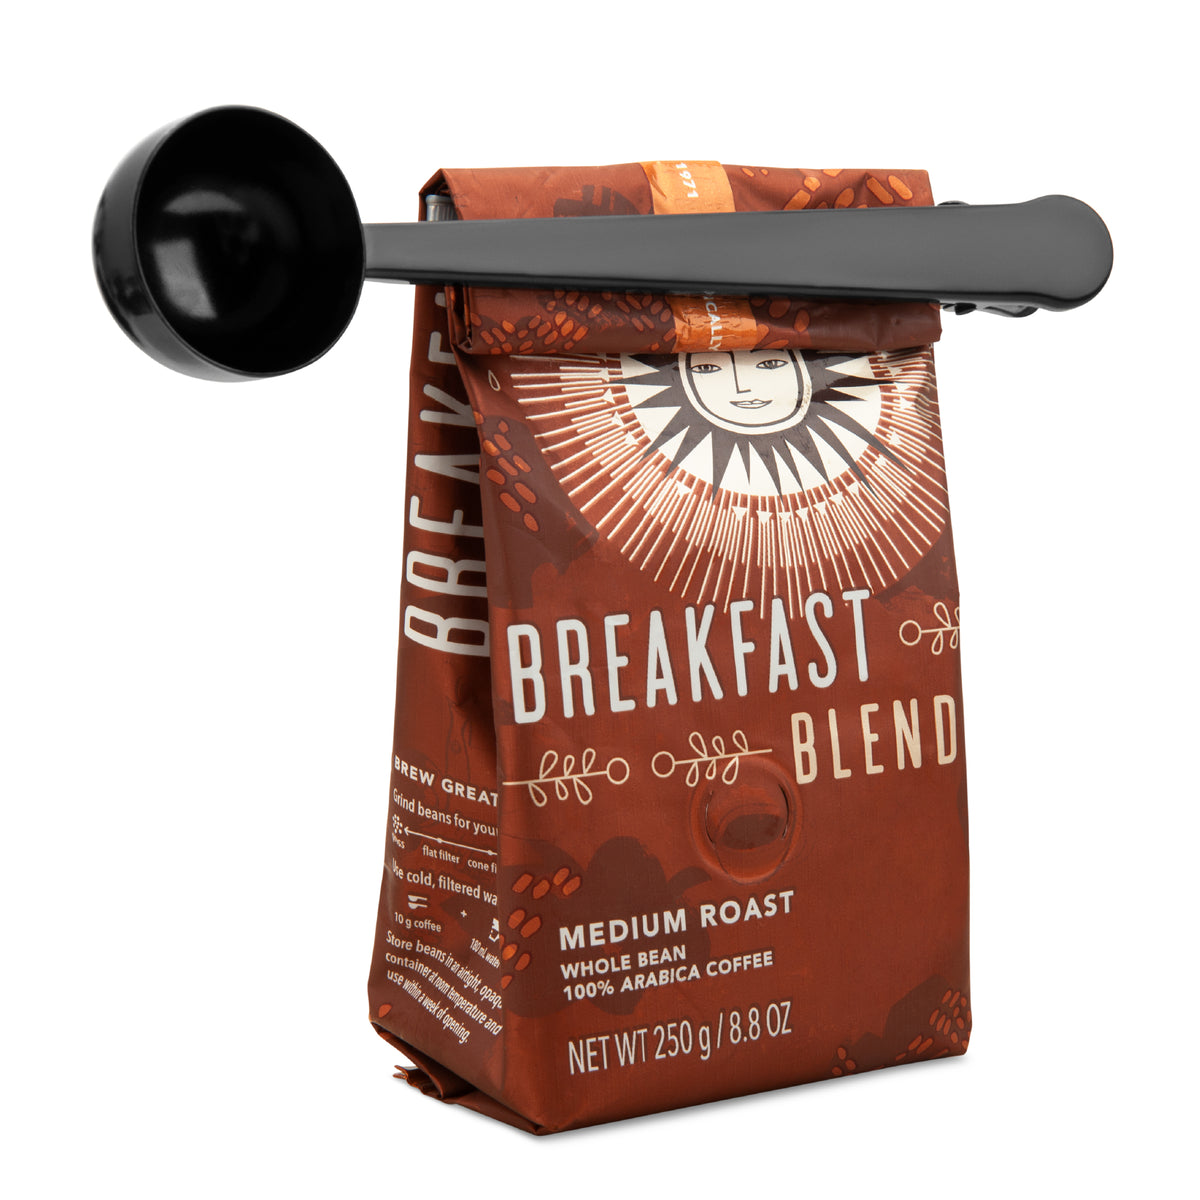 EspressoWorks Coffee Scoop with Bag Clip